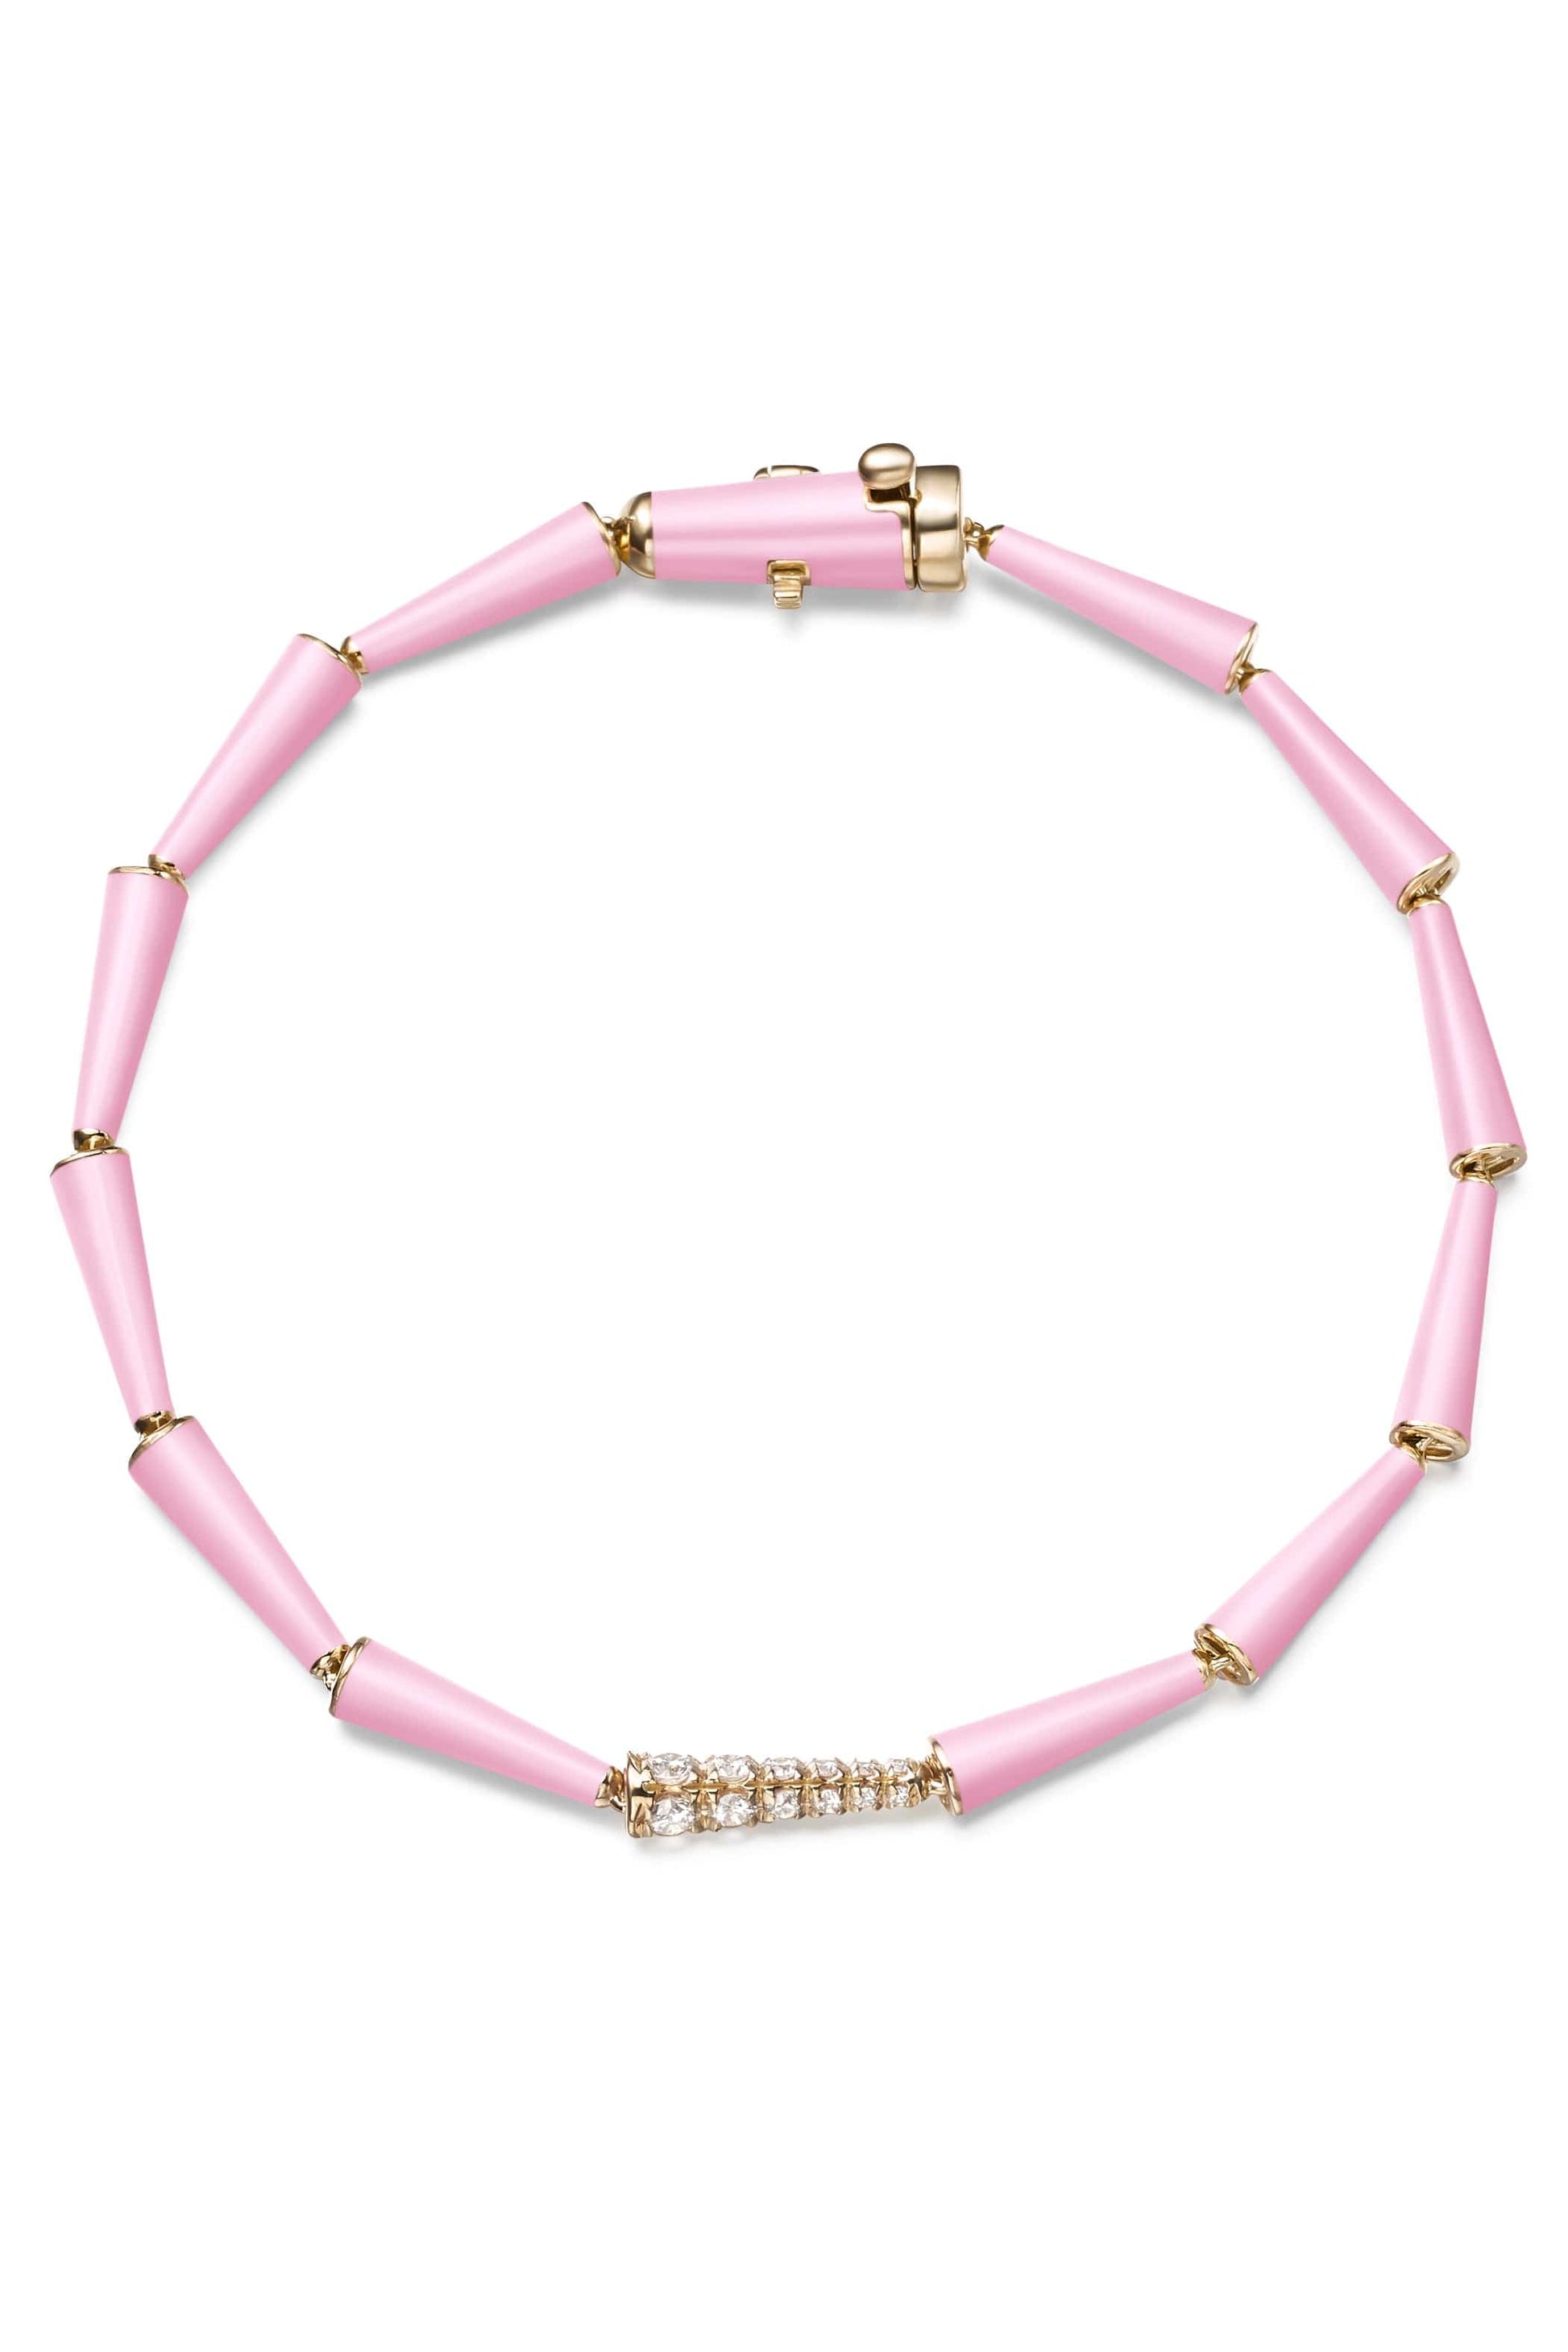 MELISSA KAYE-Marissa Pink Lola Linked Bracelet-